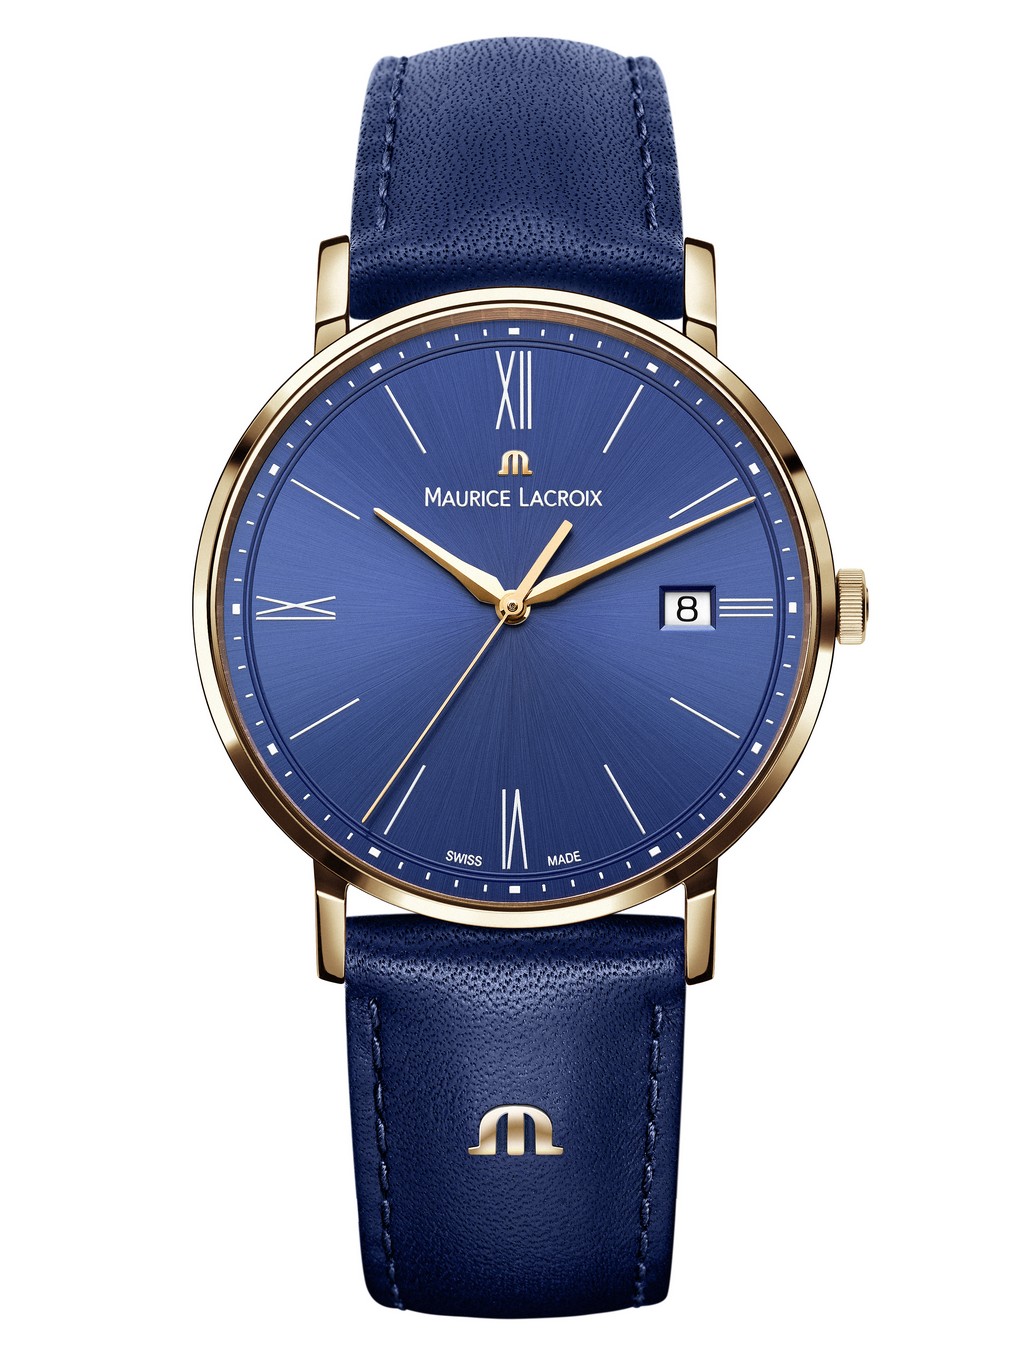 Idee regali Natale 2015: i preziosi orologi di Maurice Lacroix, per lui e per lei